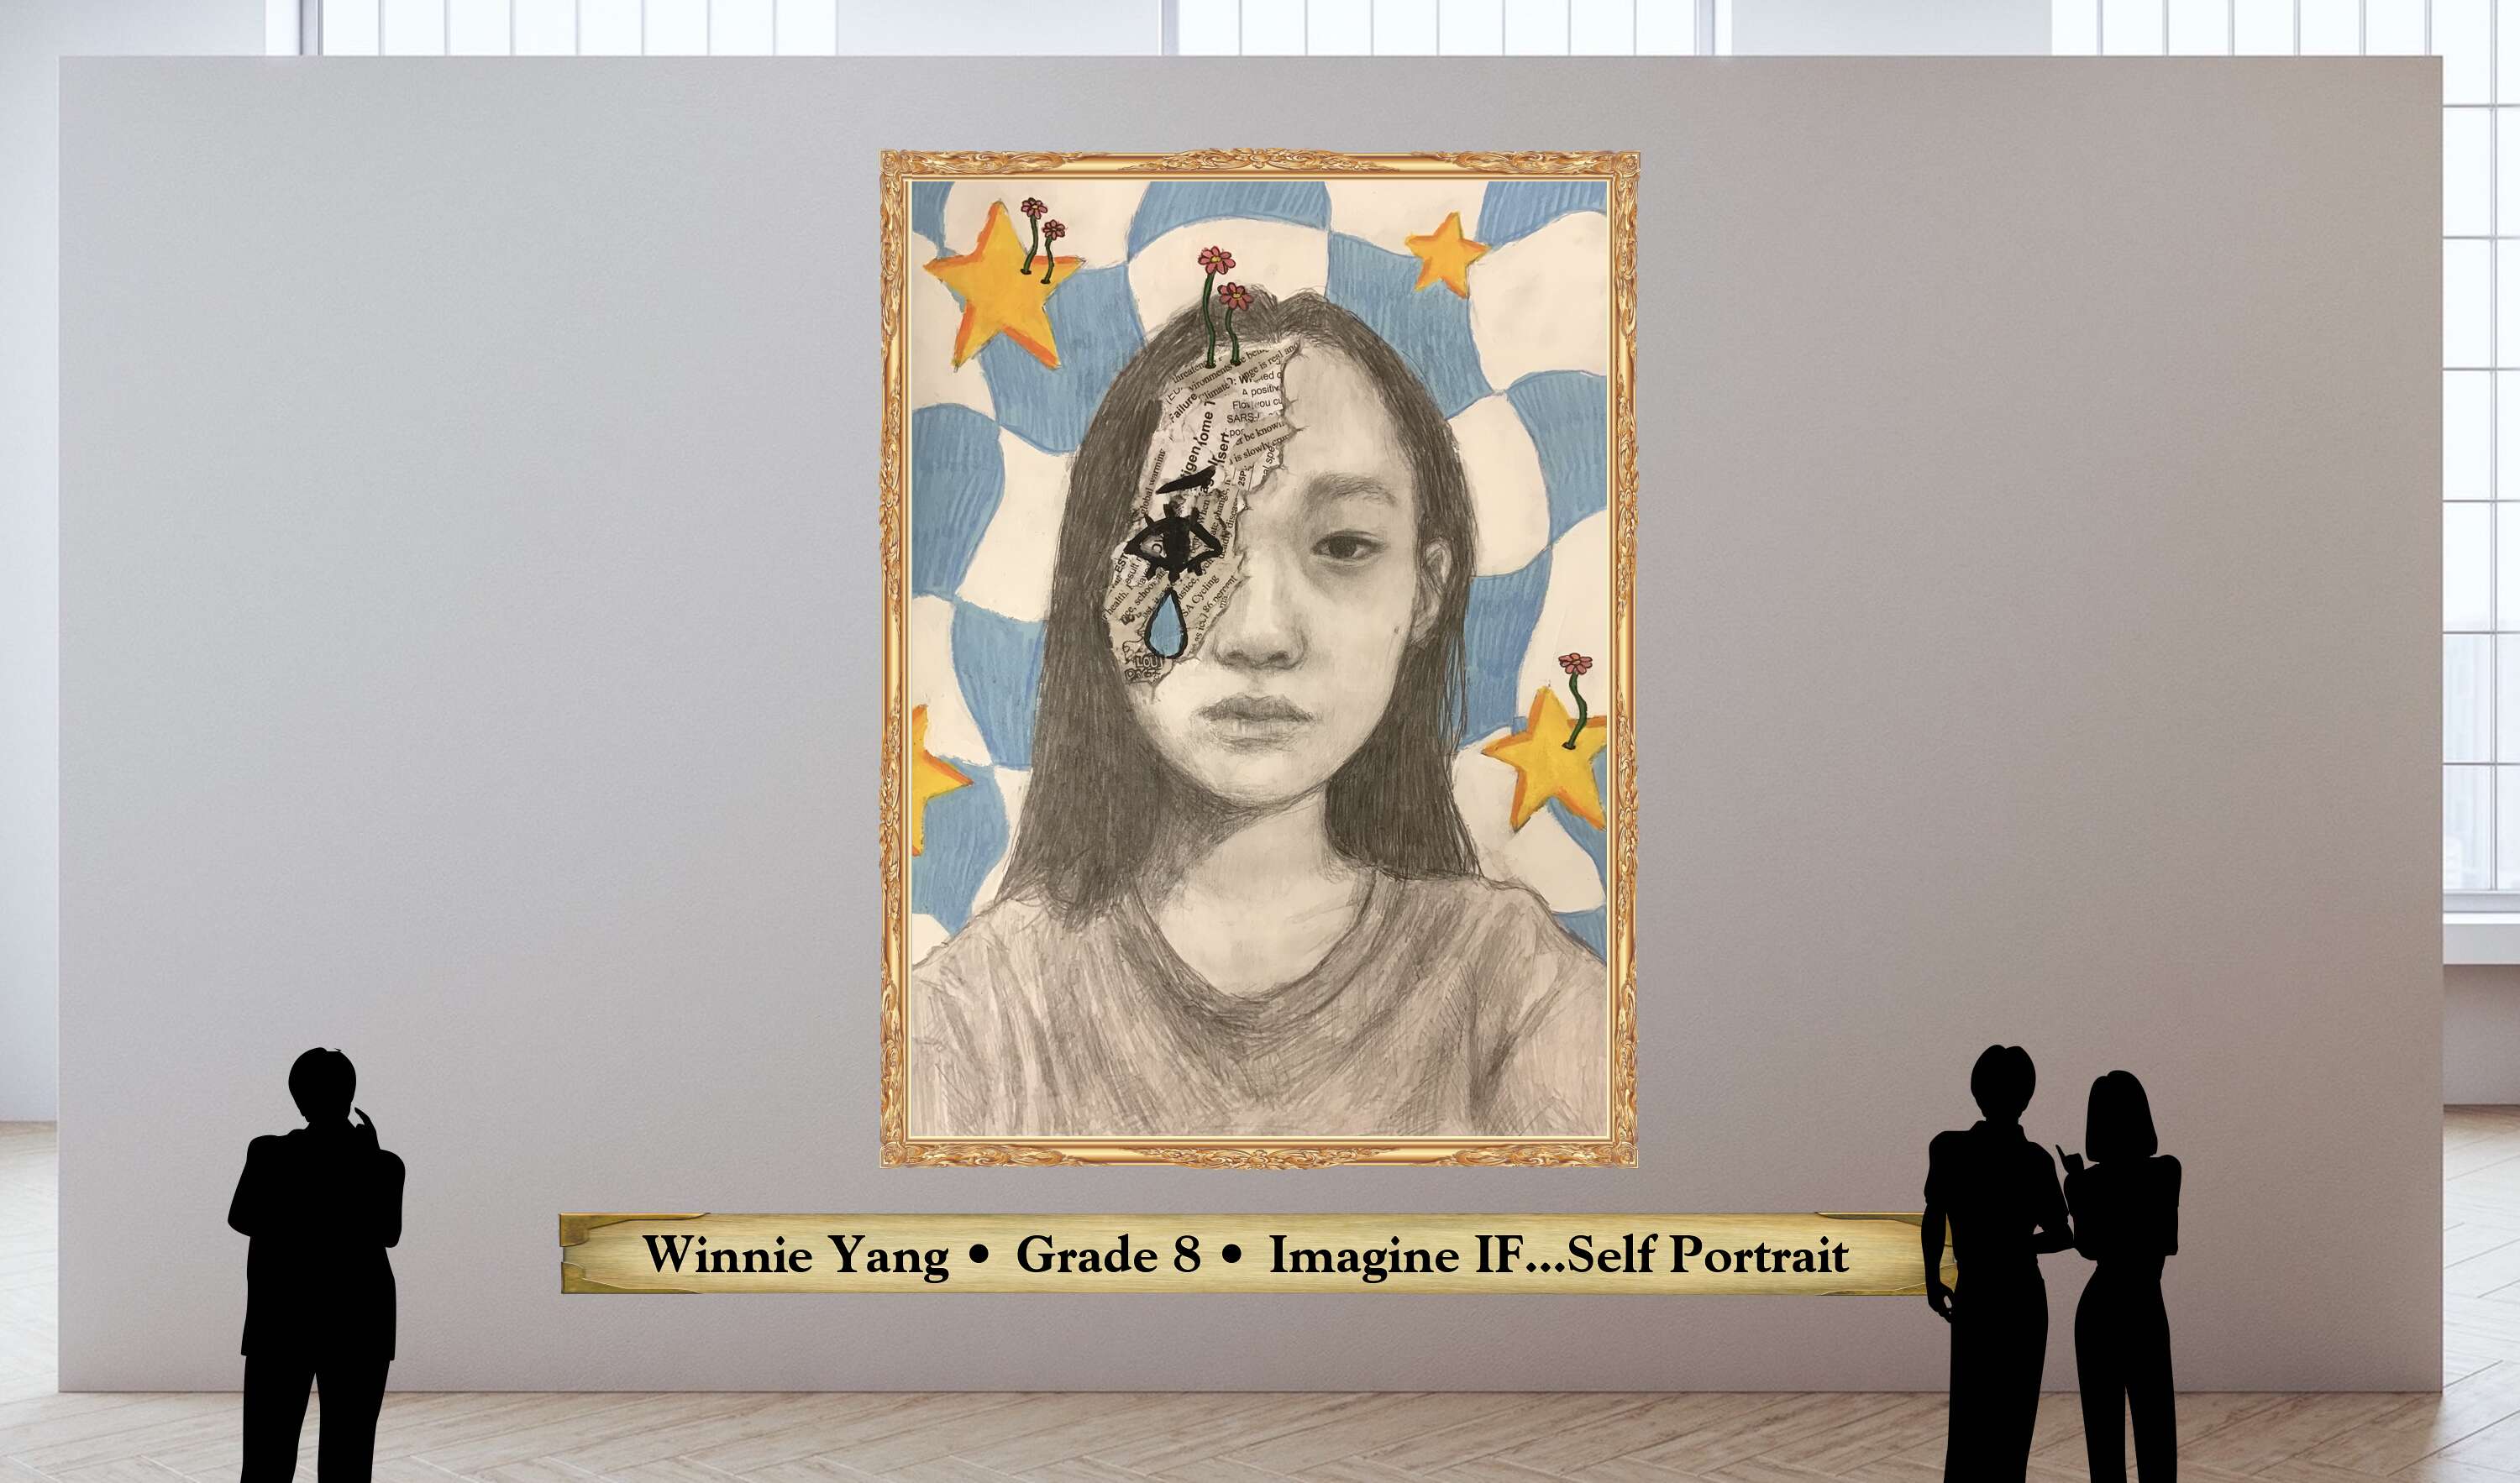 Winnie Yang • Grade 8 • Imagine IF...Self Portrait  